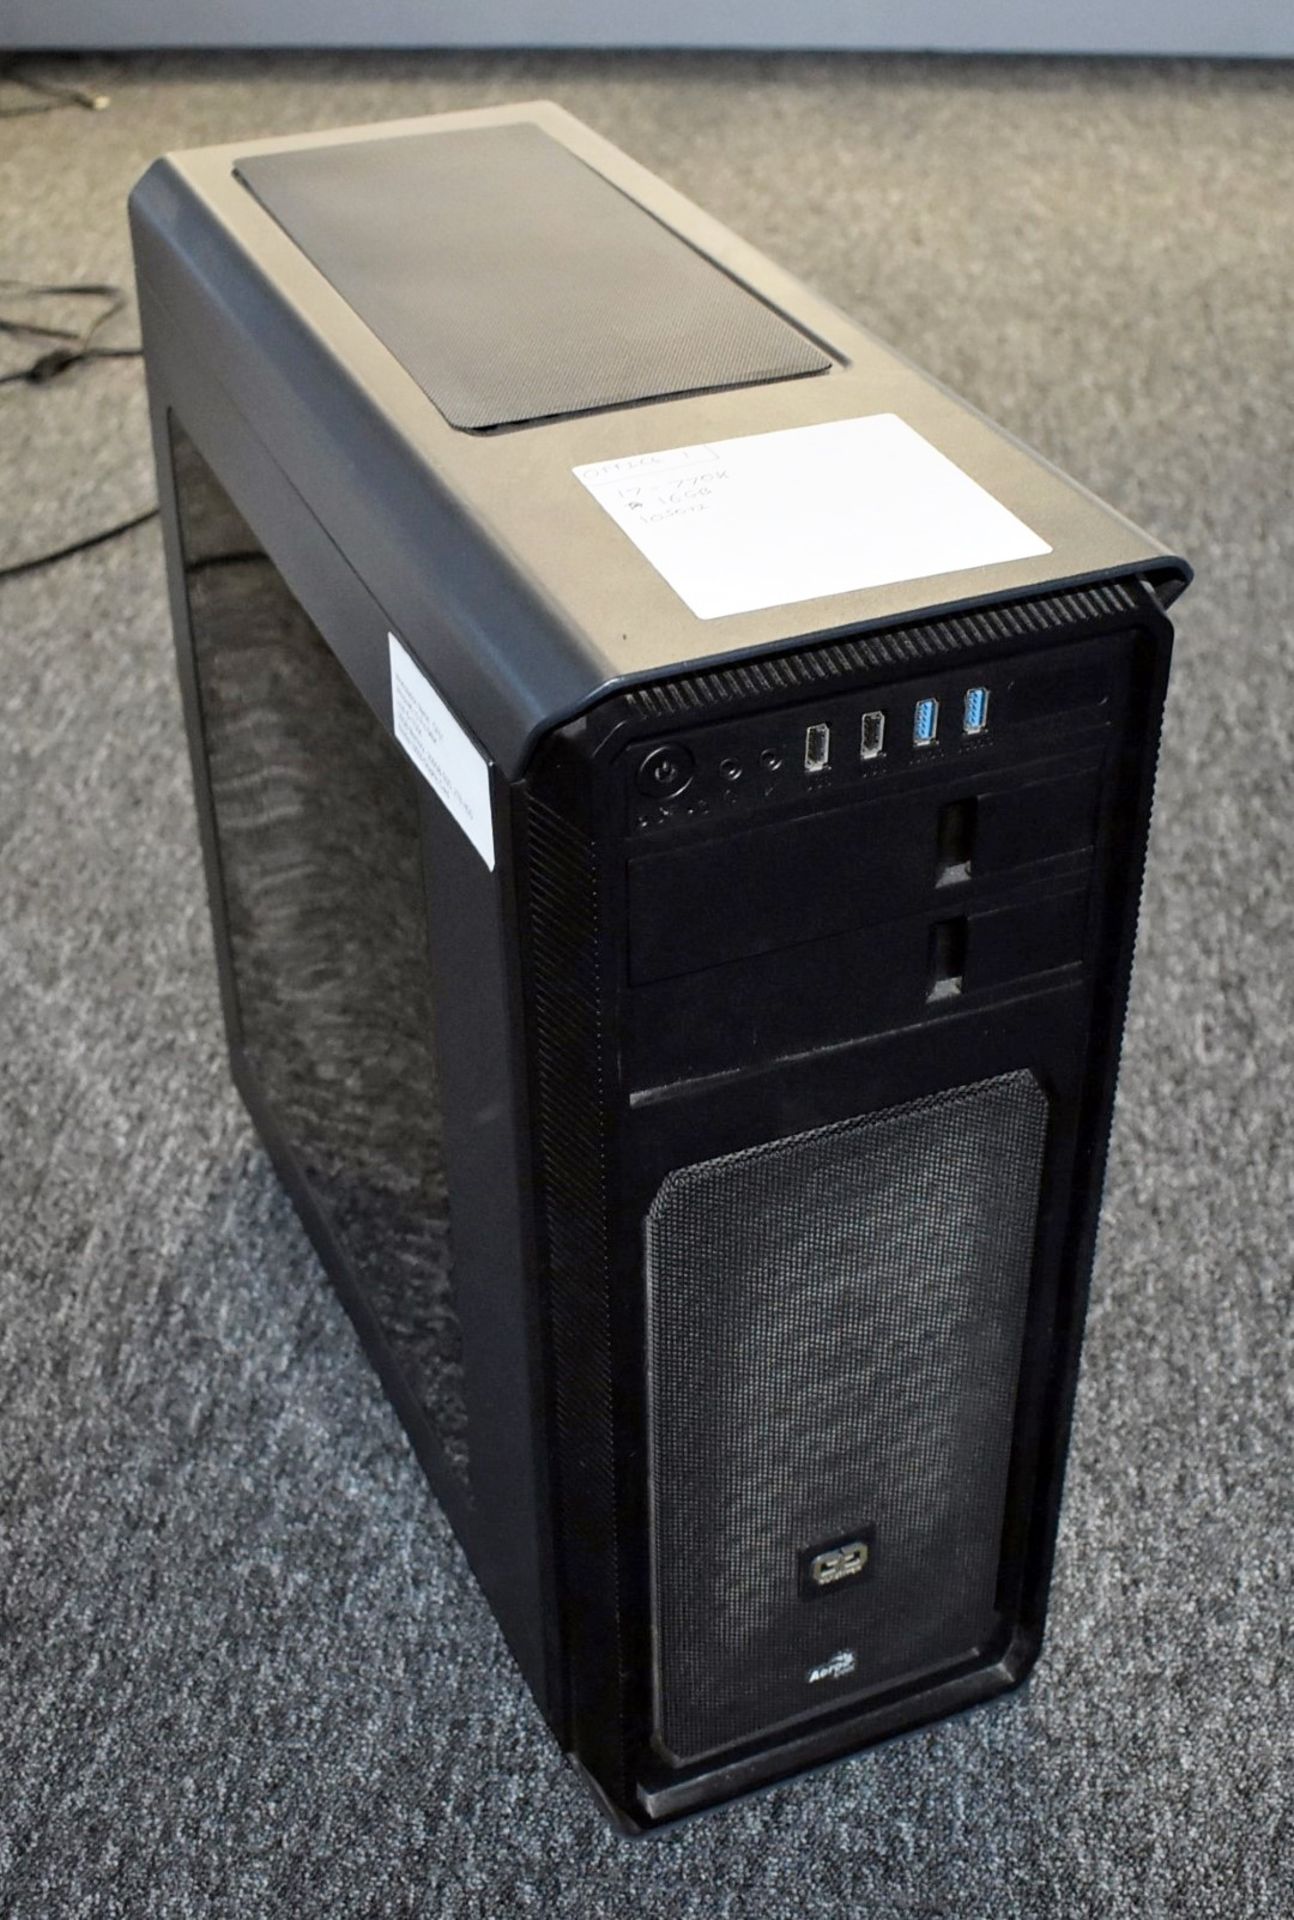 1 x Desktop Computer Featuring an Intel i7-7700k Processor, Asus USB 3.0 Motherboard, 16GB Corsair - Image 2 of 8